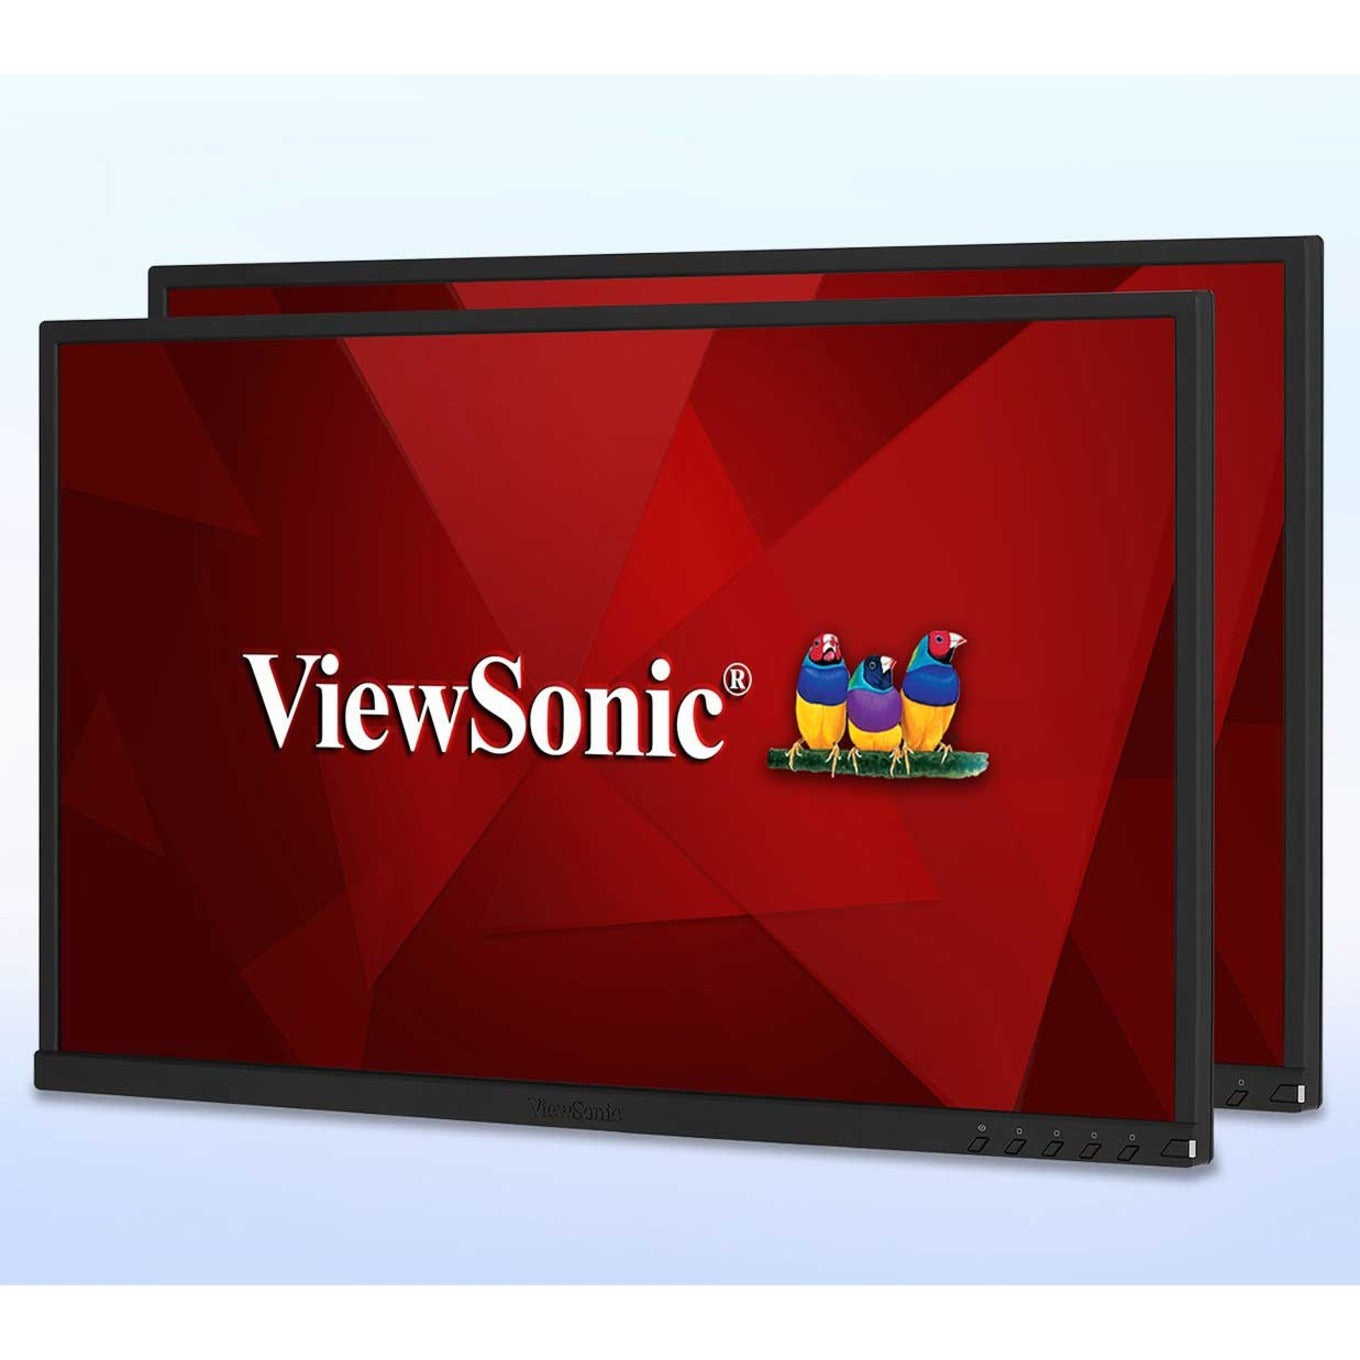 ViewSonic VG2448_H2 24" Dual Monitors with Full HD IPS Panel, USB Hub, 1920x1080 Resolution